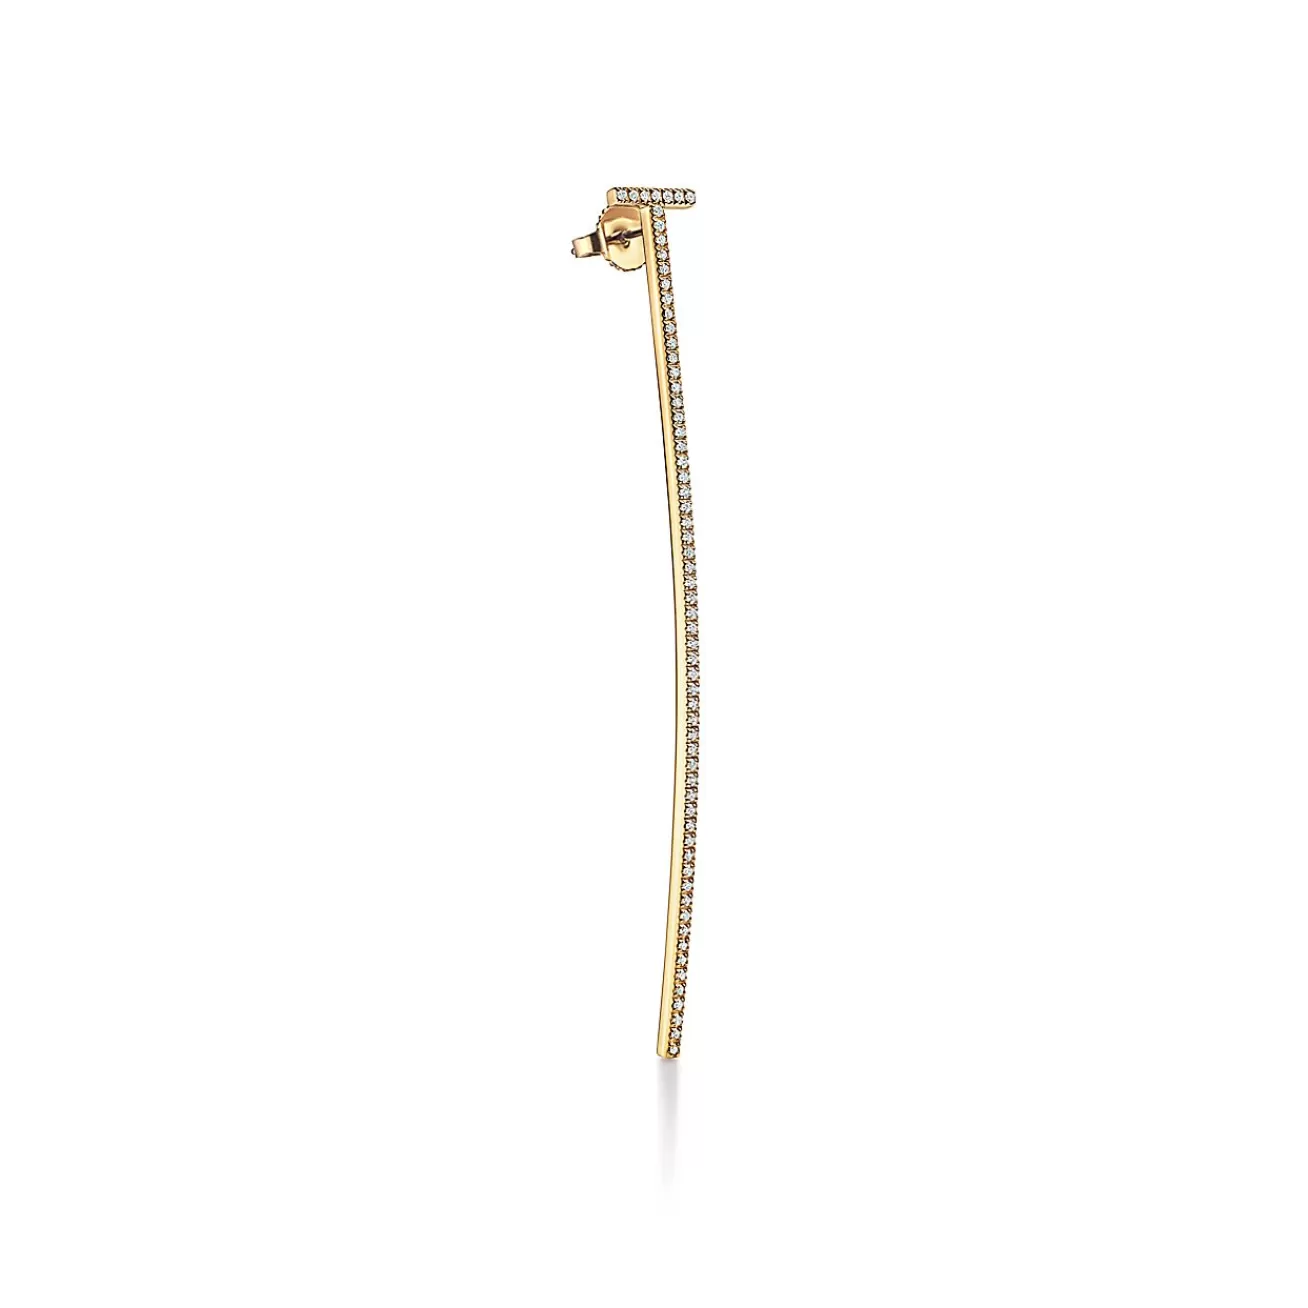 Tiffany & Co. Tiffany T elongated wire bar earrings in 18k gold with diamonds. | ^ Earrings | Gold Jewelry